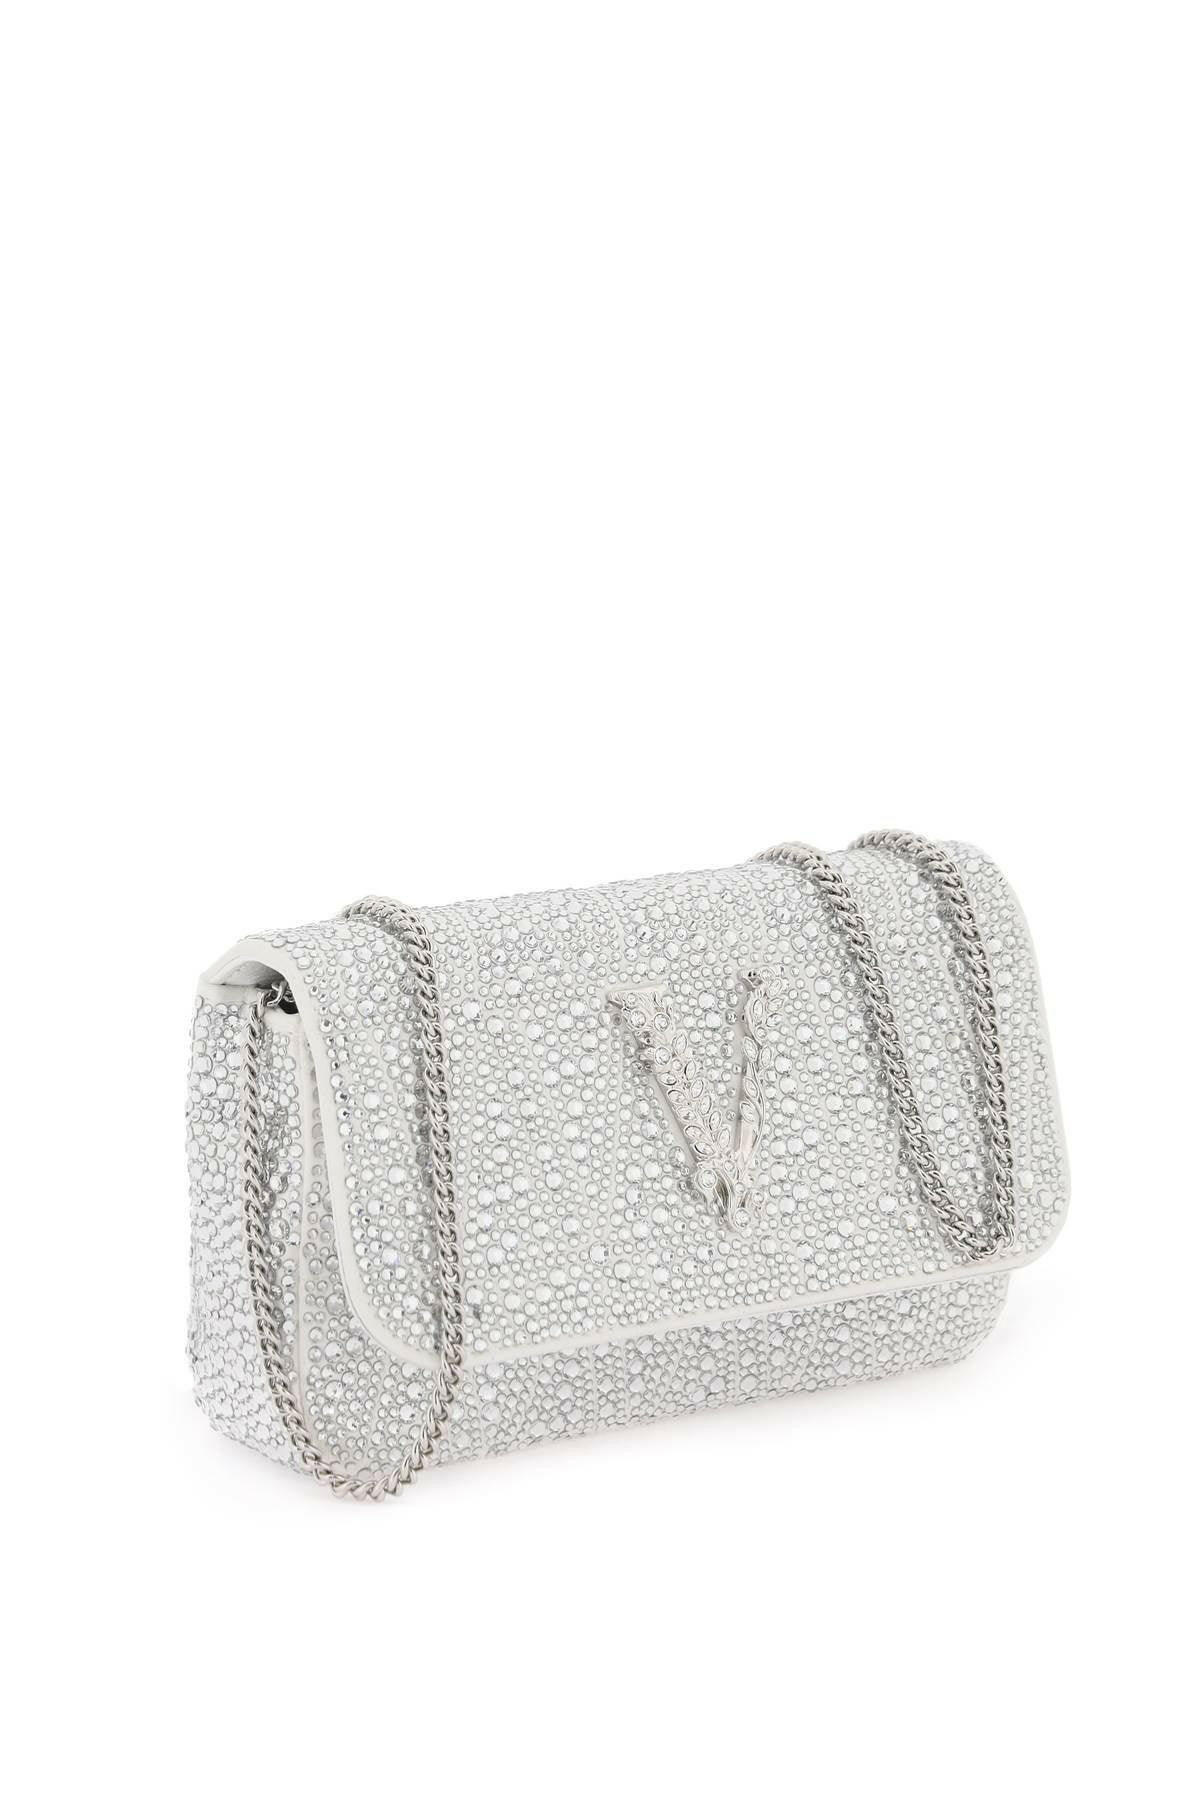 Versace Virtus Mini Bag With Crystals - JOHN JULIA